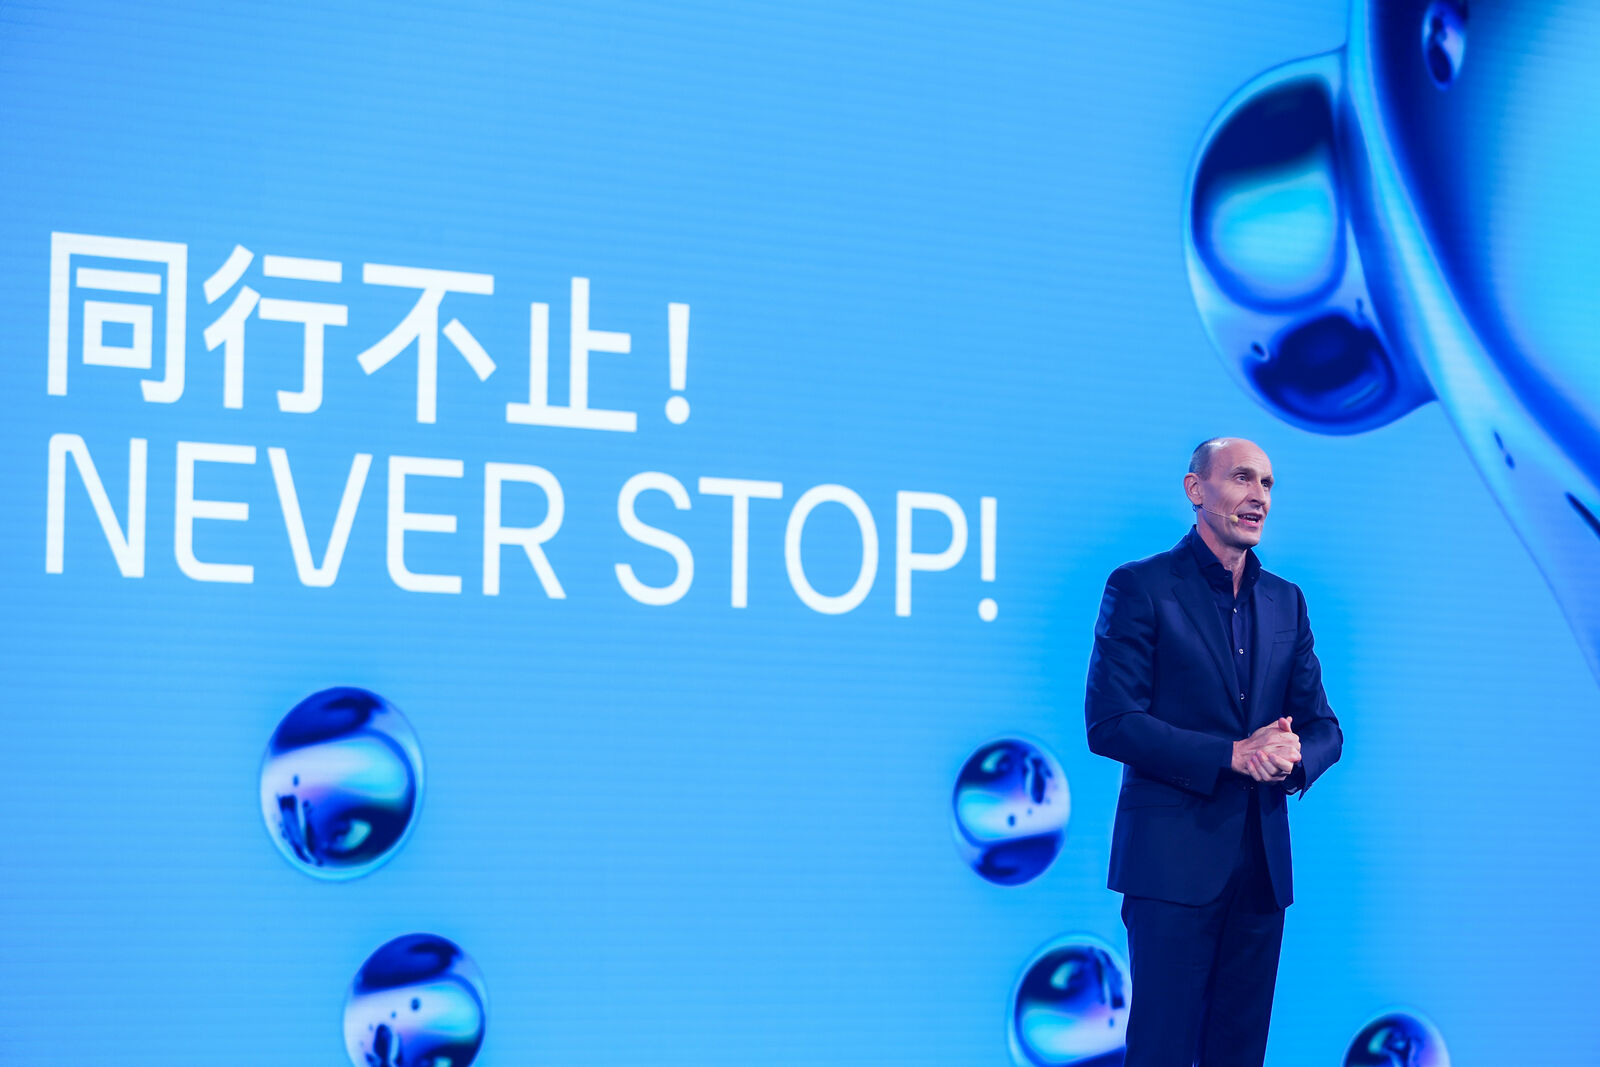 Ralf Brandstätter, Member of the board of Volkswagen AG for China, speaks at the Volkswagen Group Media Night 2024 in Beijing